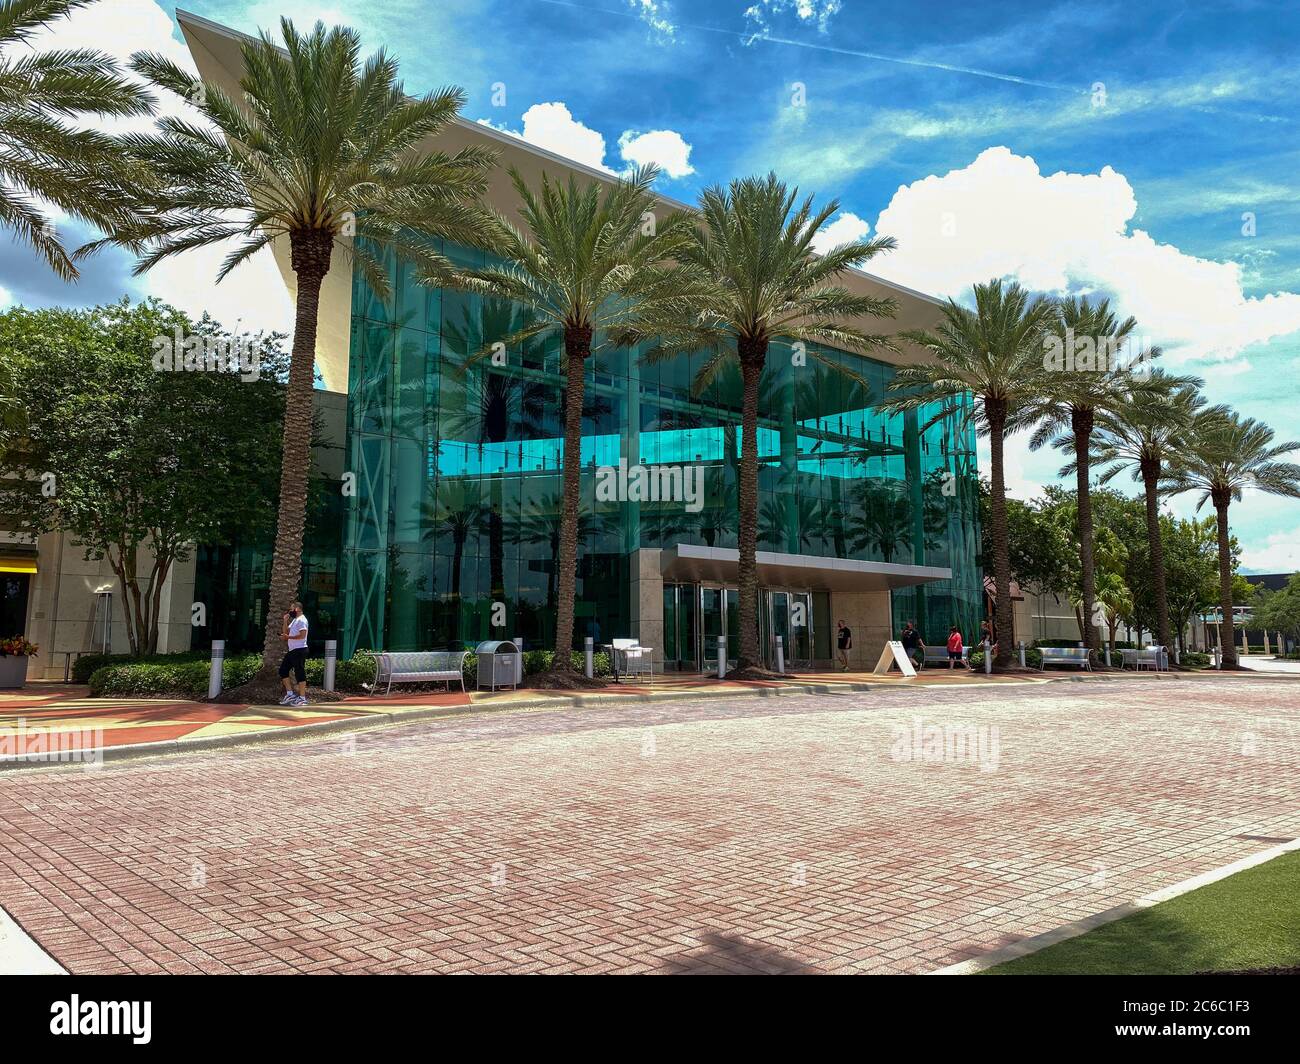 Mall at Millenia - Orlando's Premiere Shopping Mall